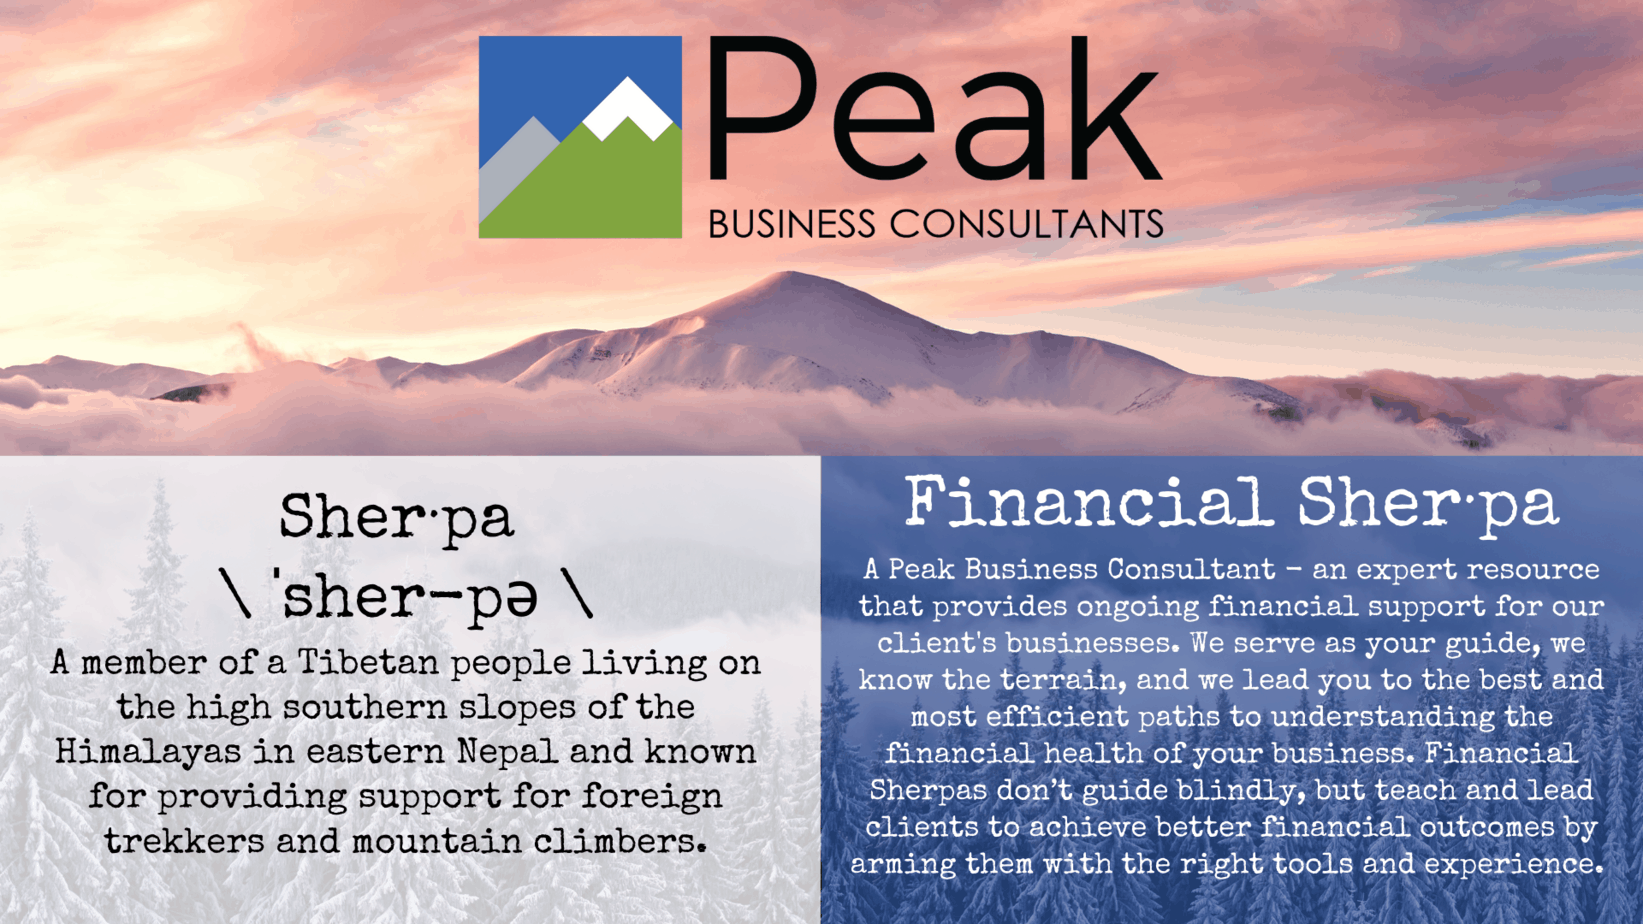 Peak Business Consultants Financial Sherpas